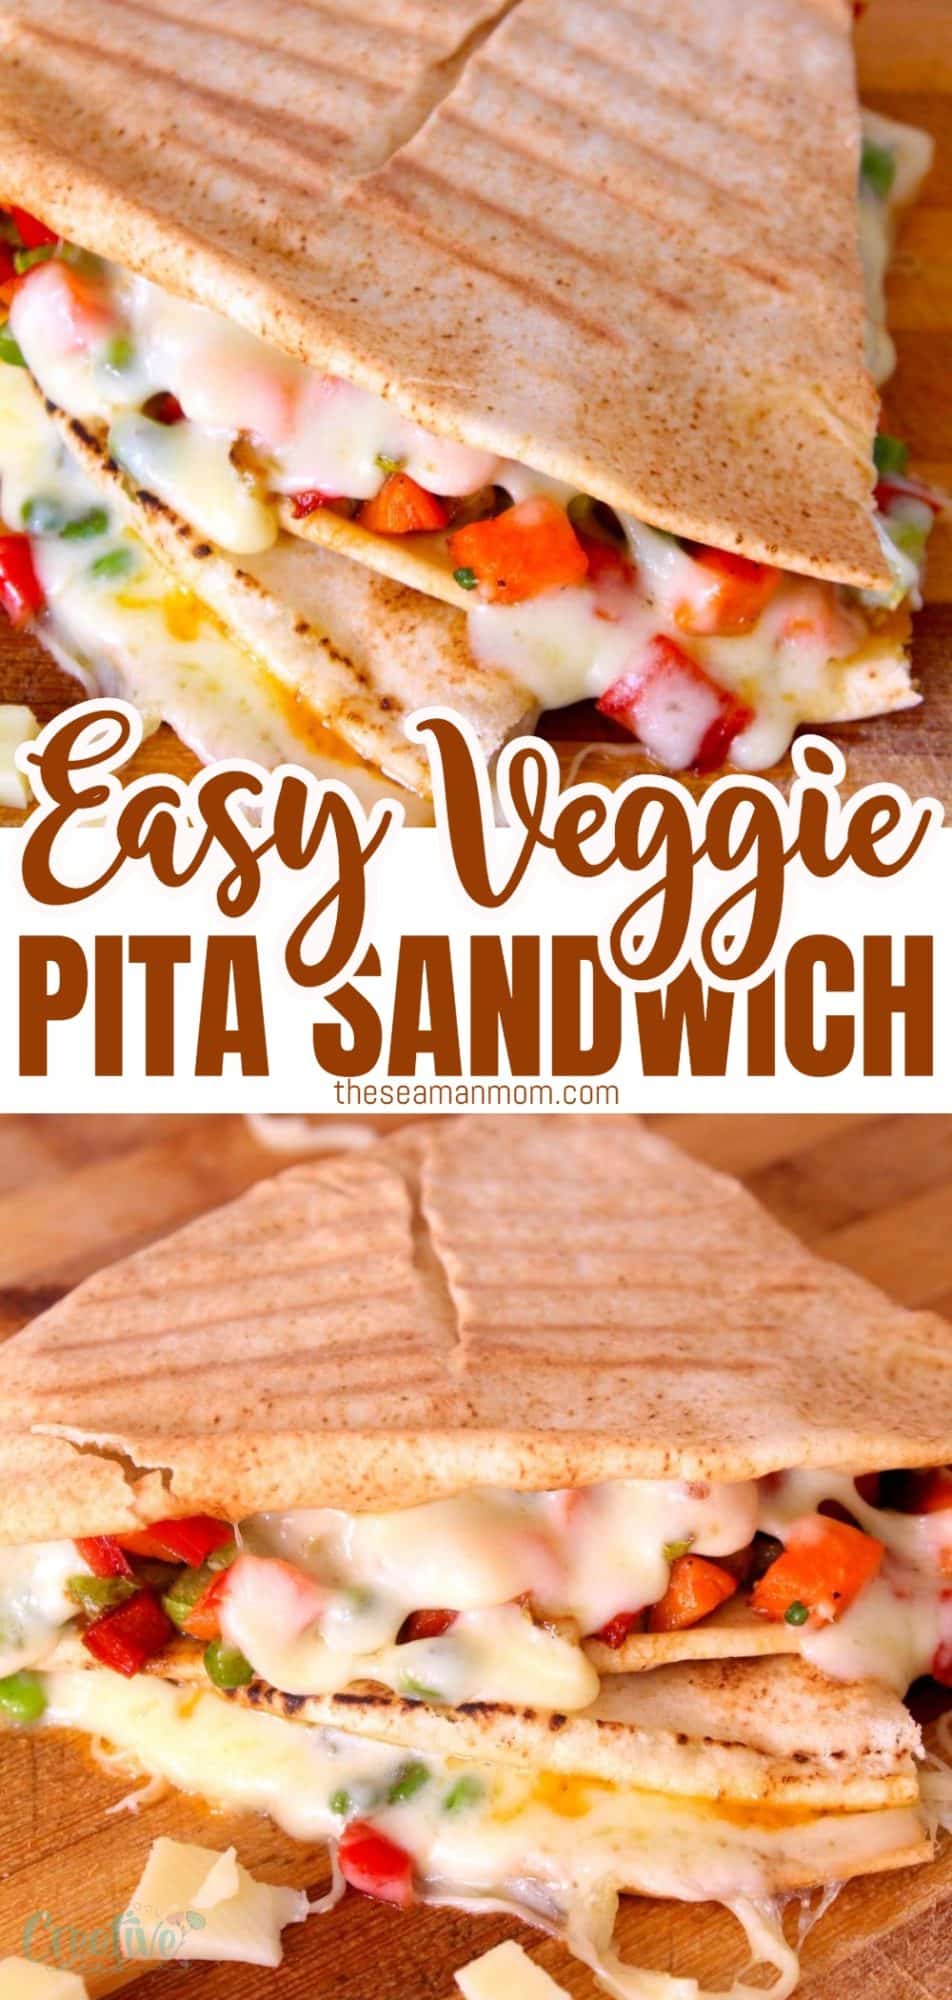 Vegetarian pita sandwich